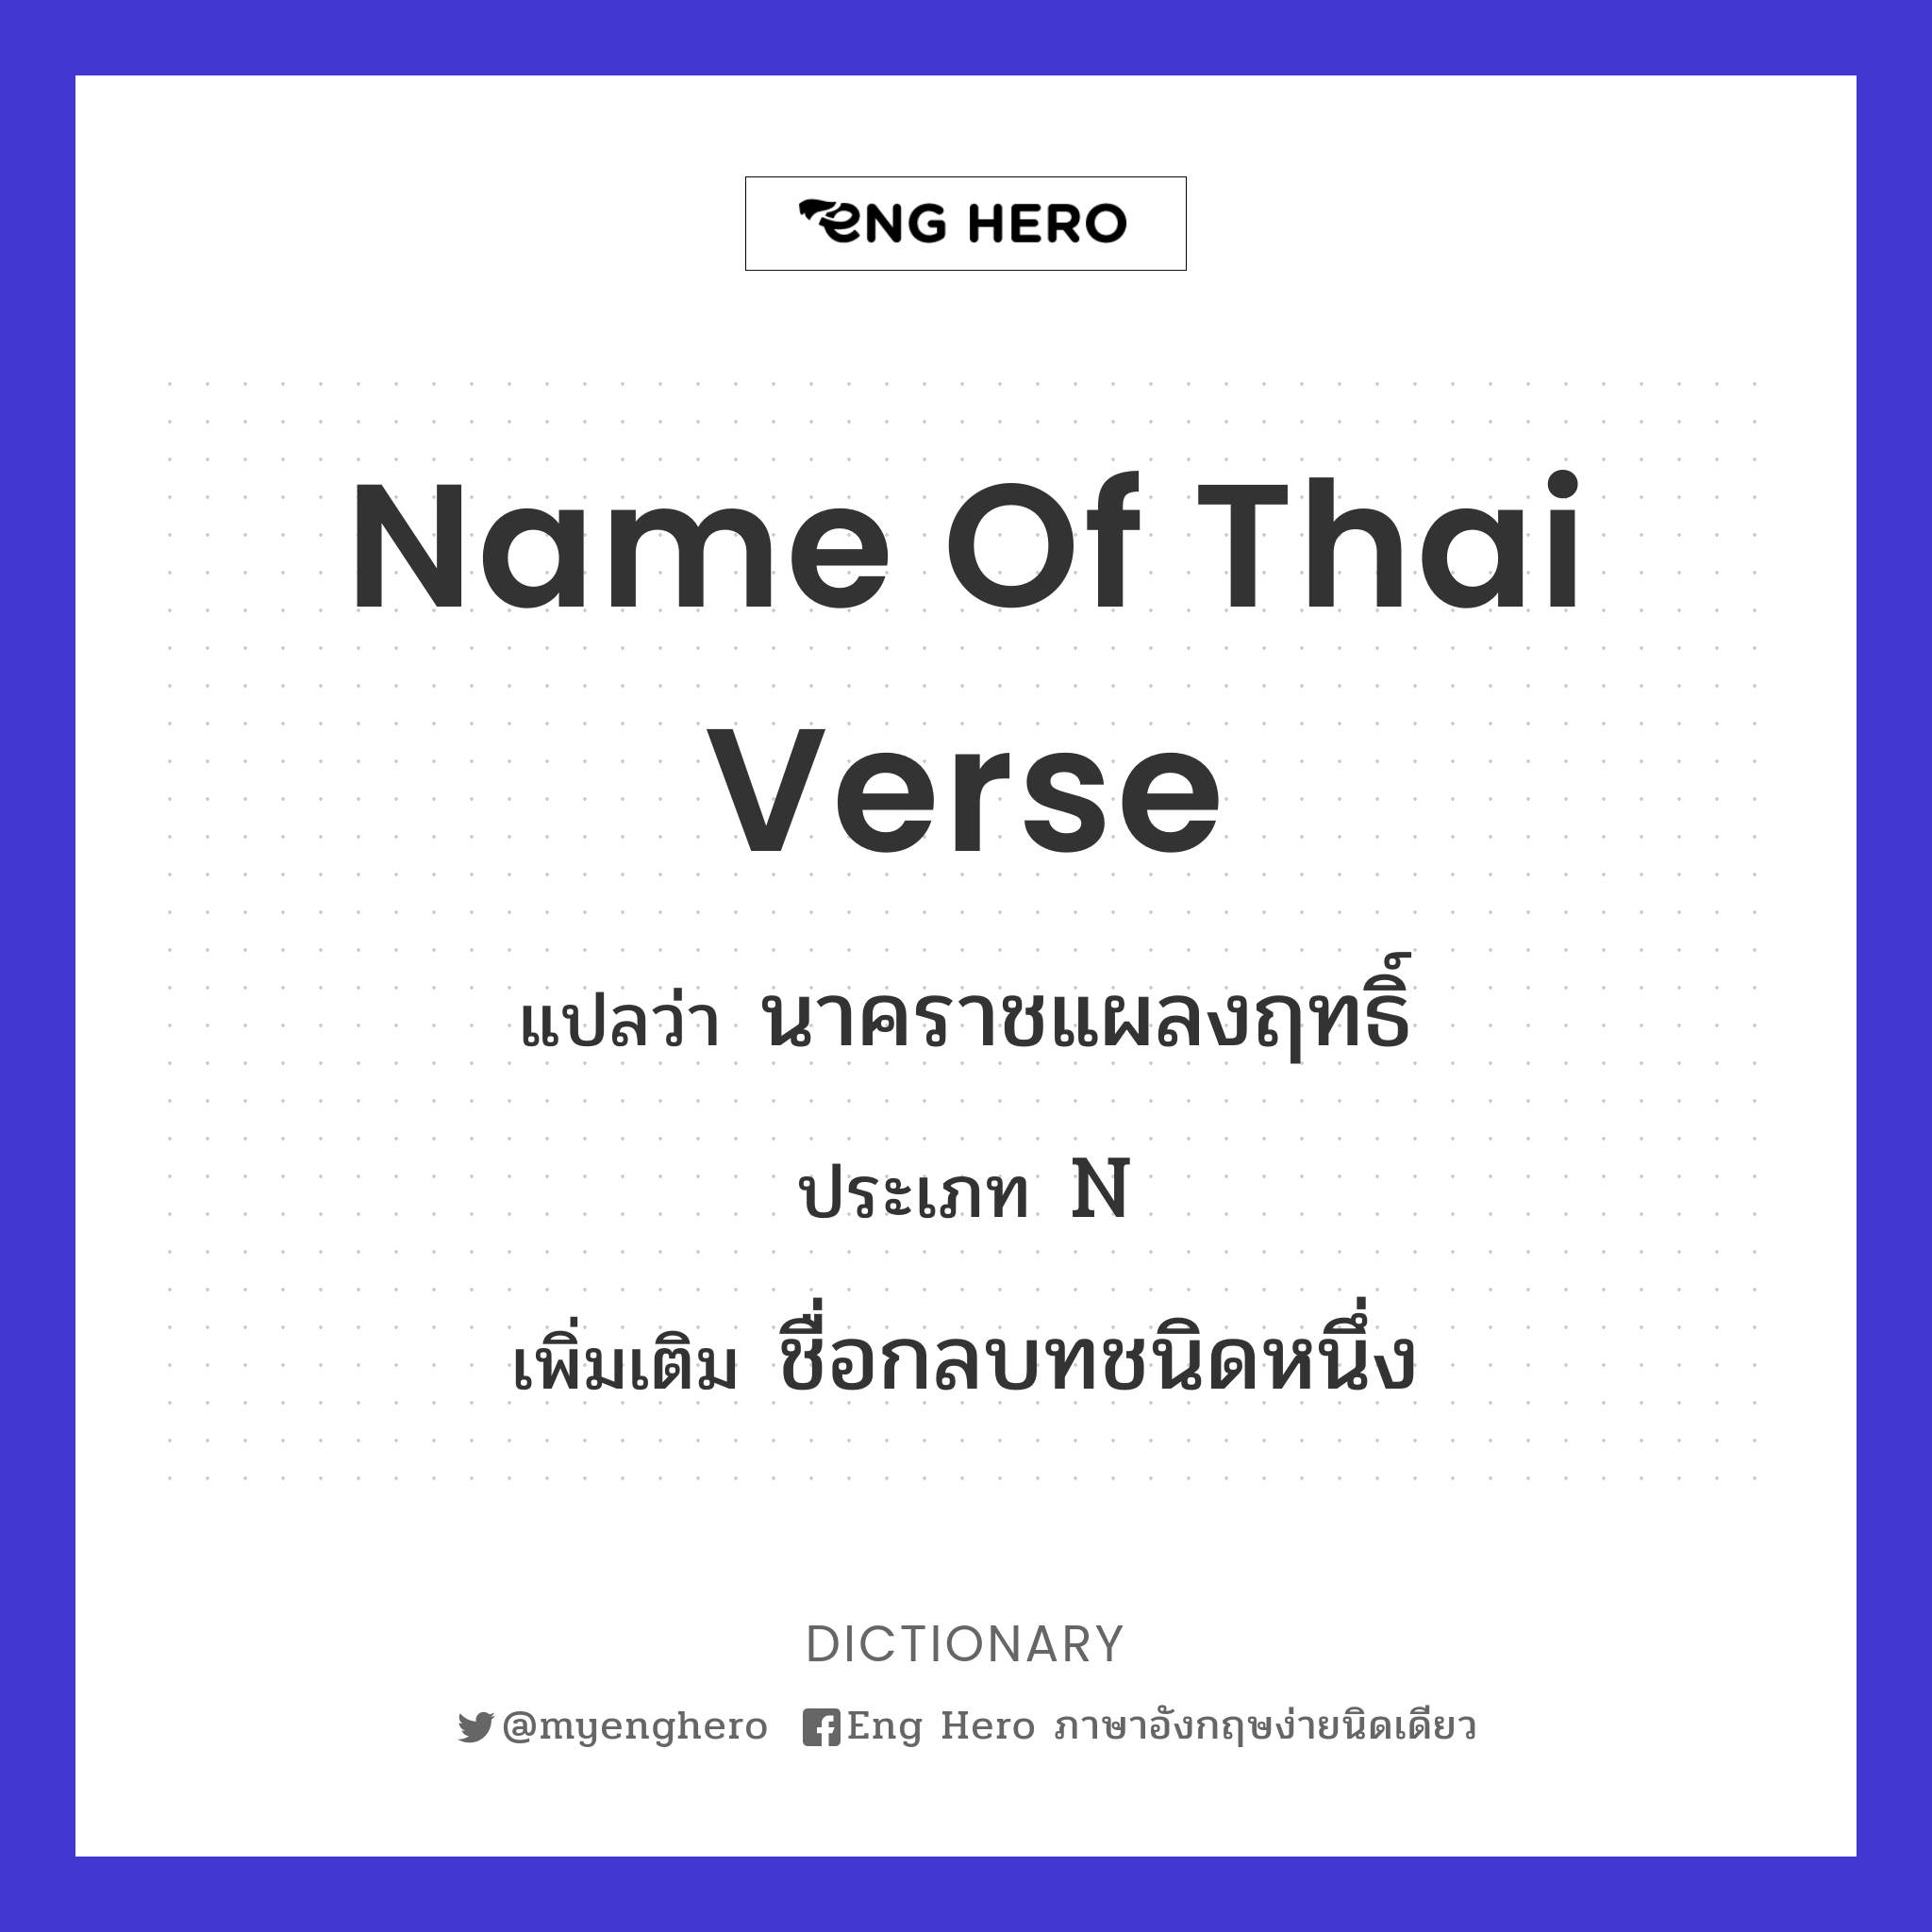 name of Thai verse